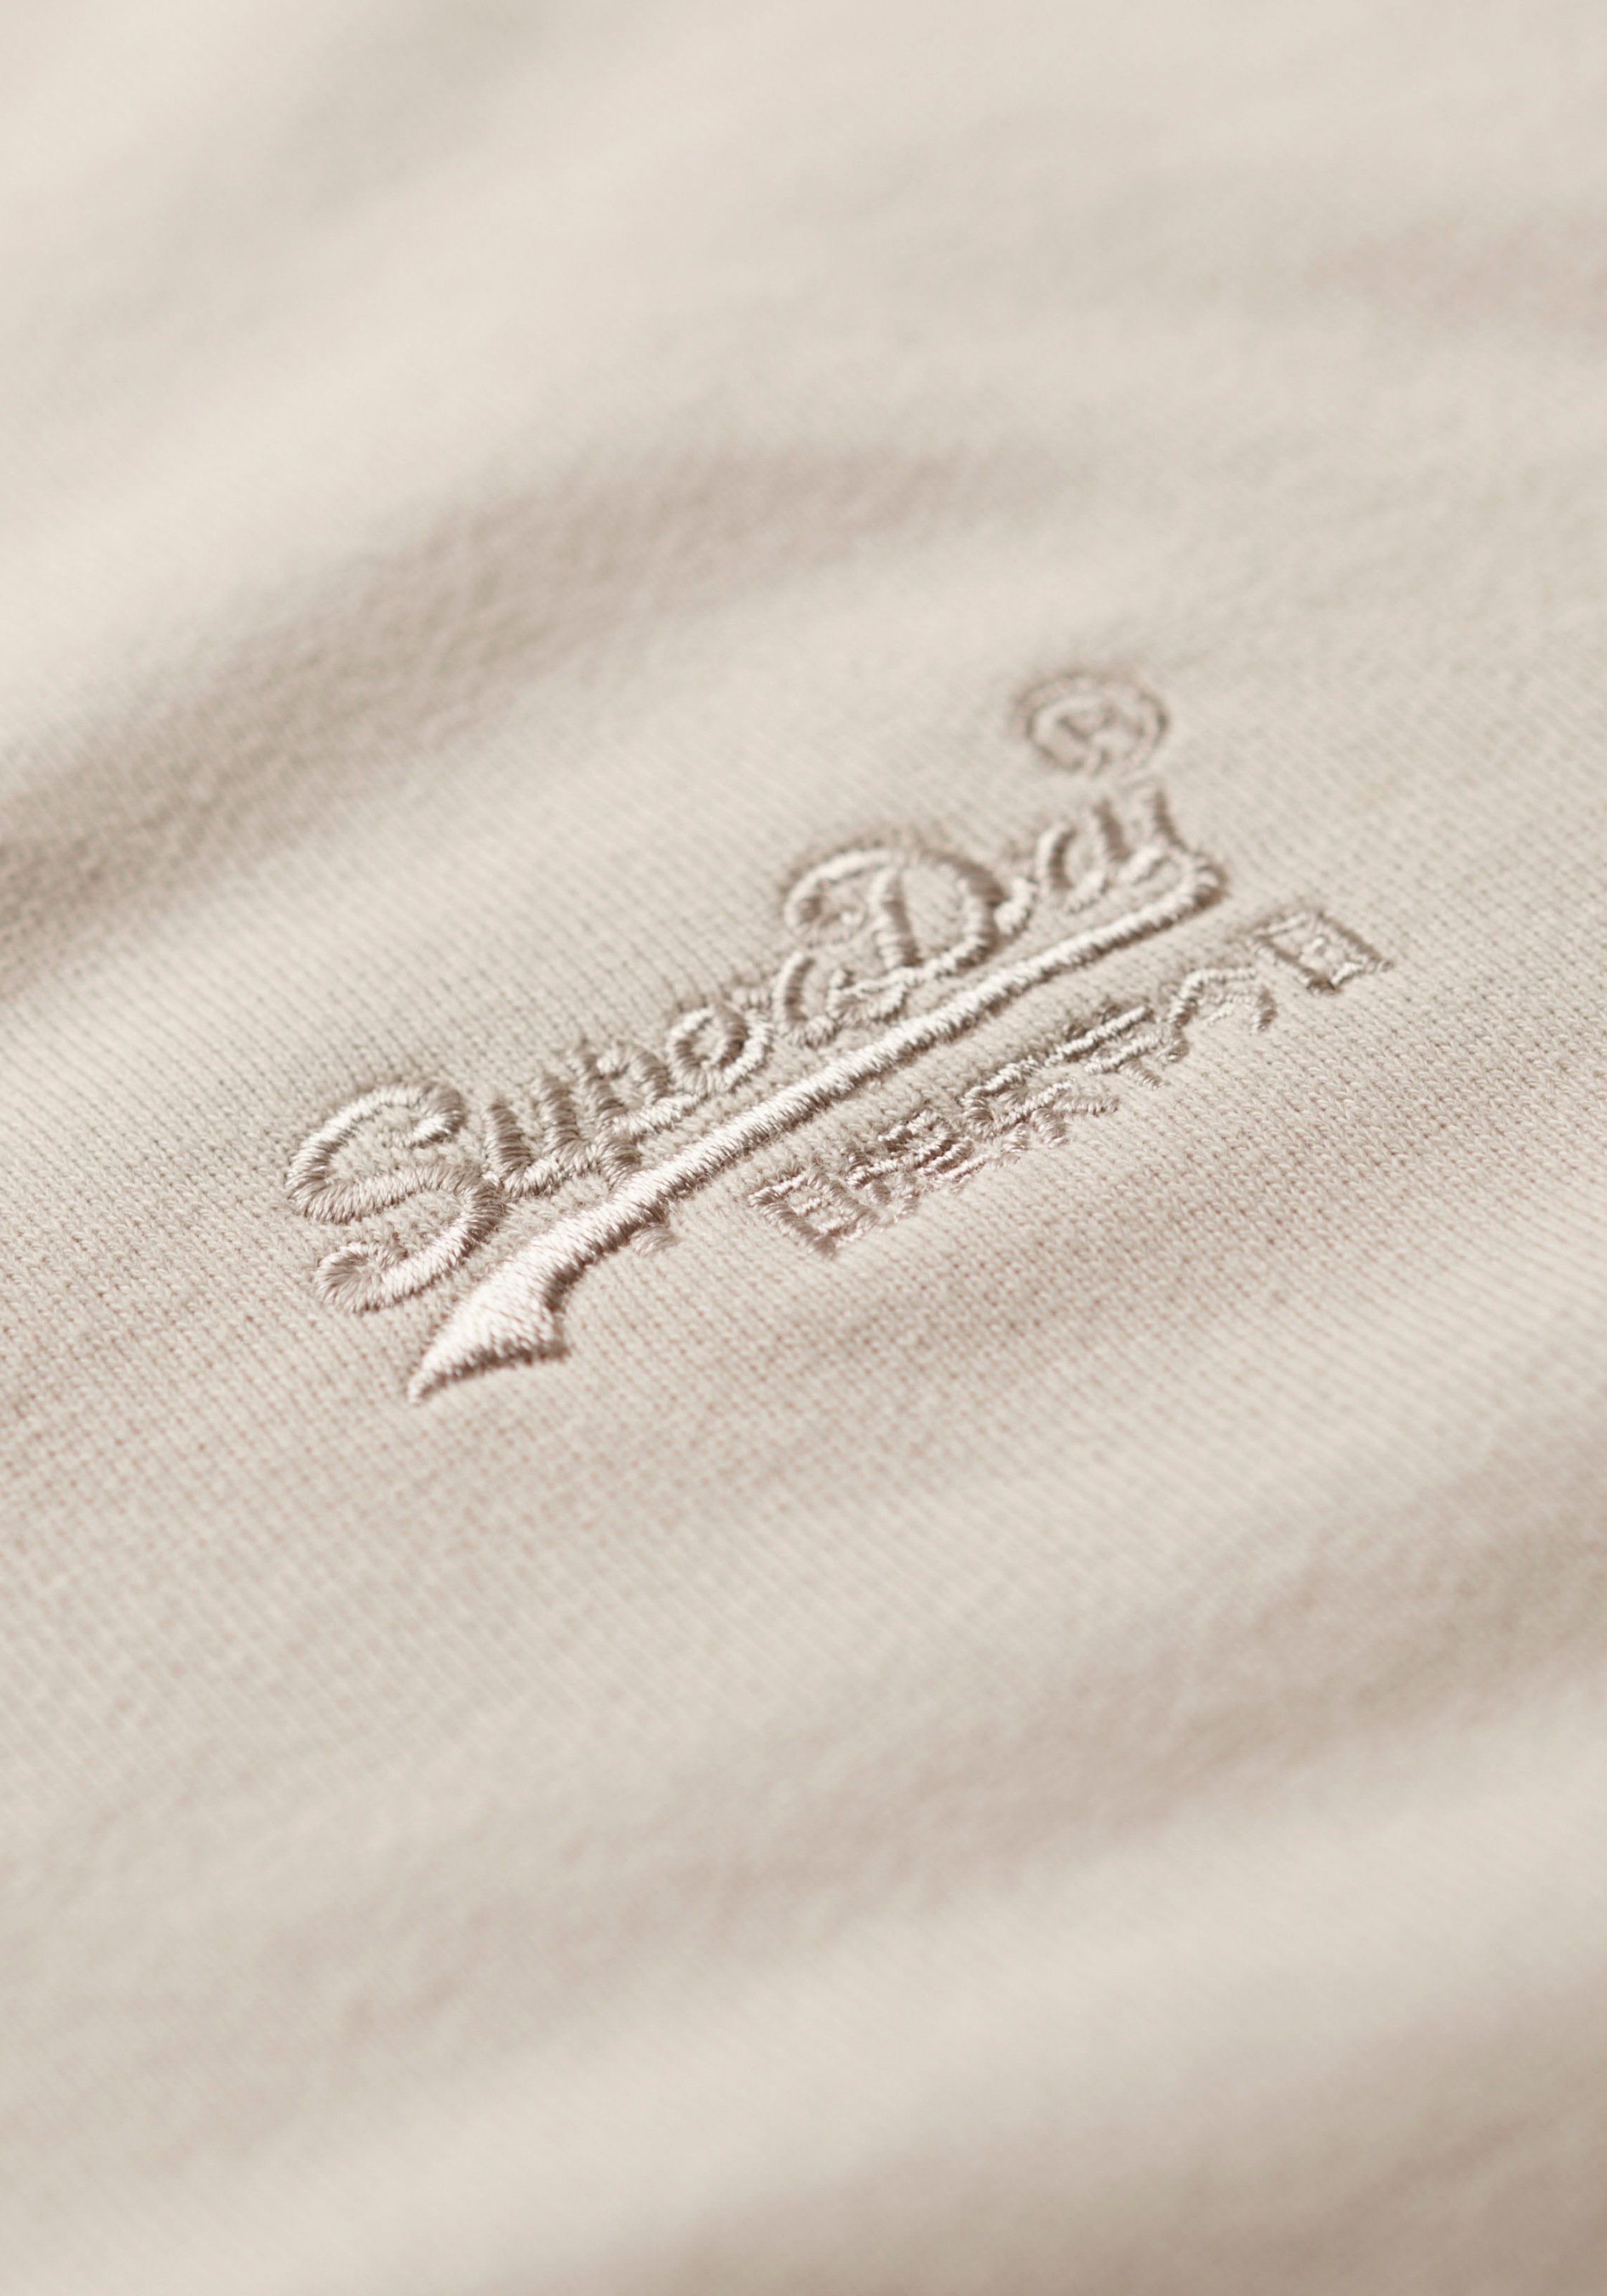 Superdry Sweatshirt »SD-ESSENTIAL LOGO CREW SWEAT UB«